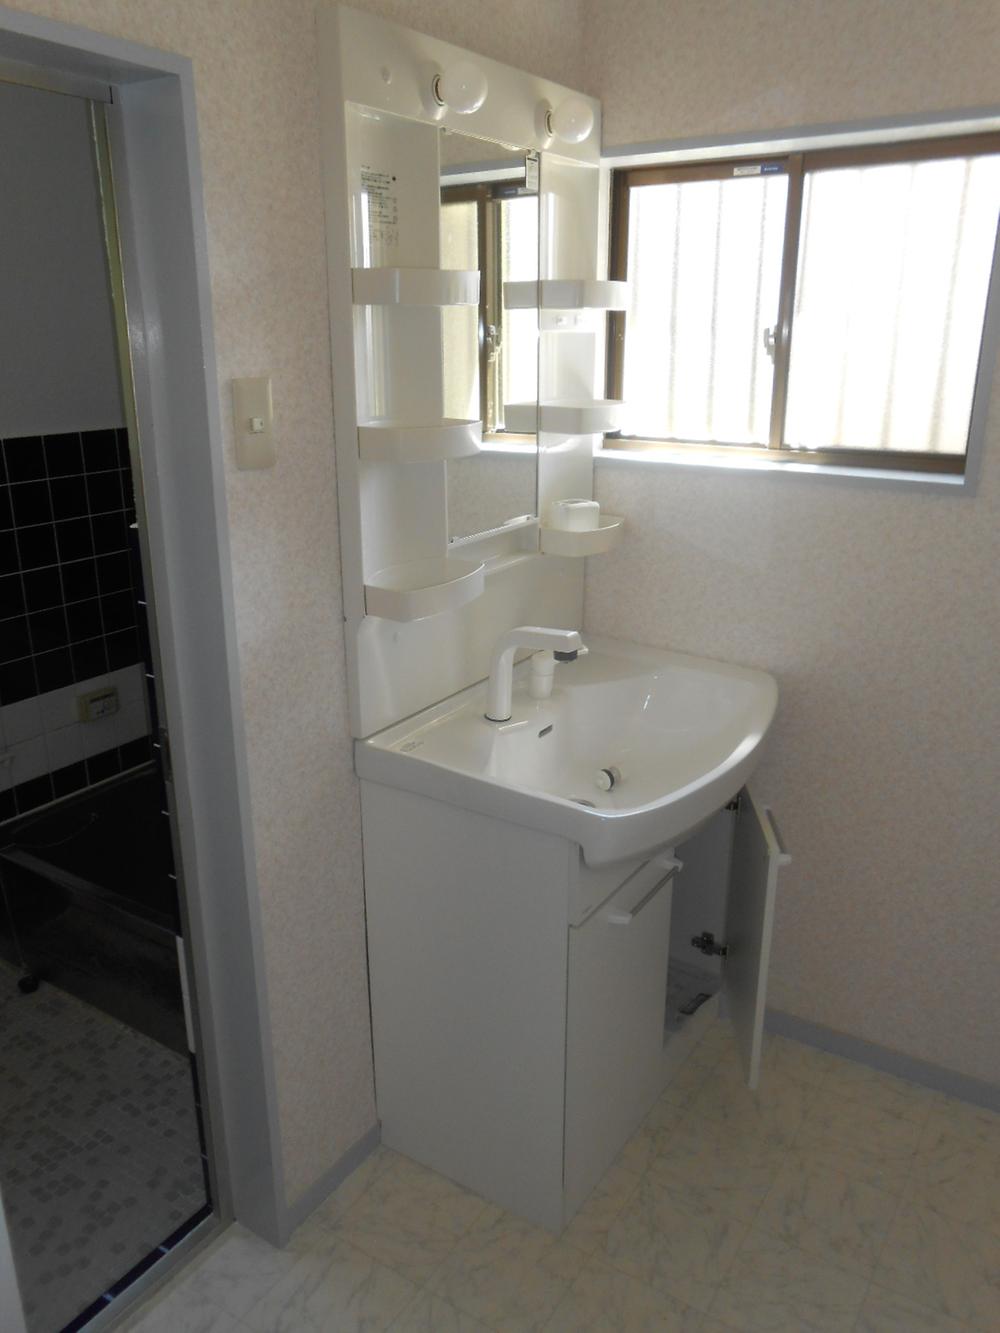 Wash basin, toilet. Shampoo dresser is also a new